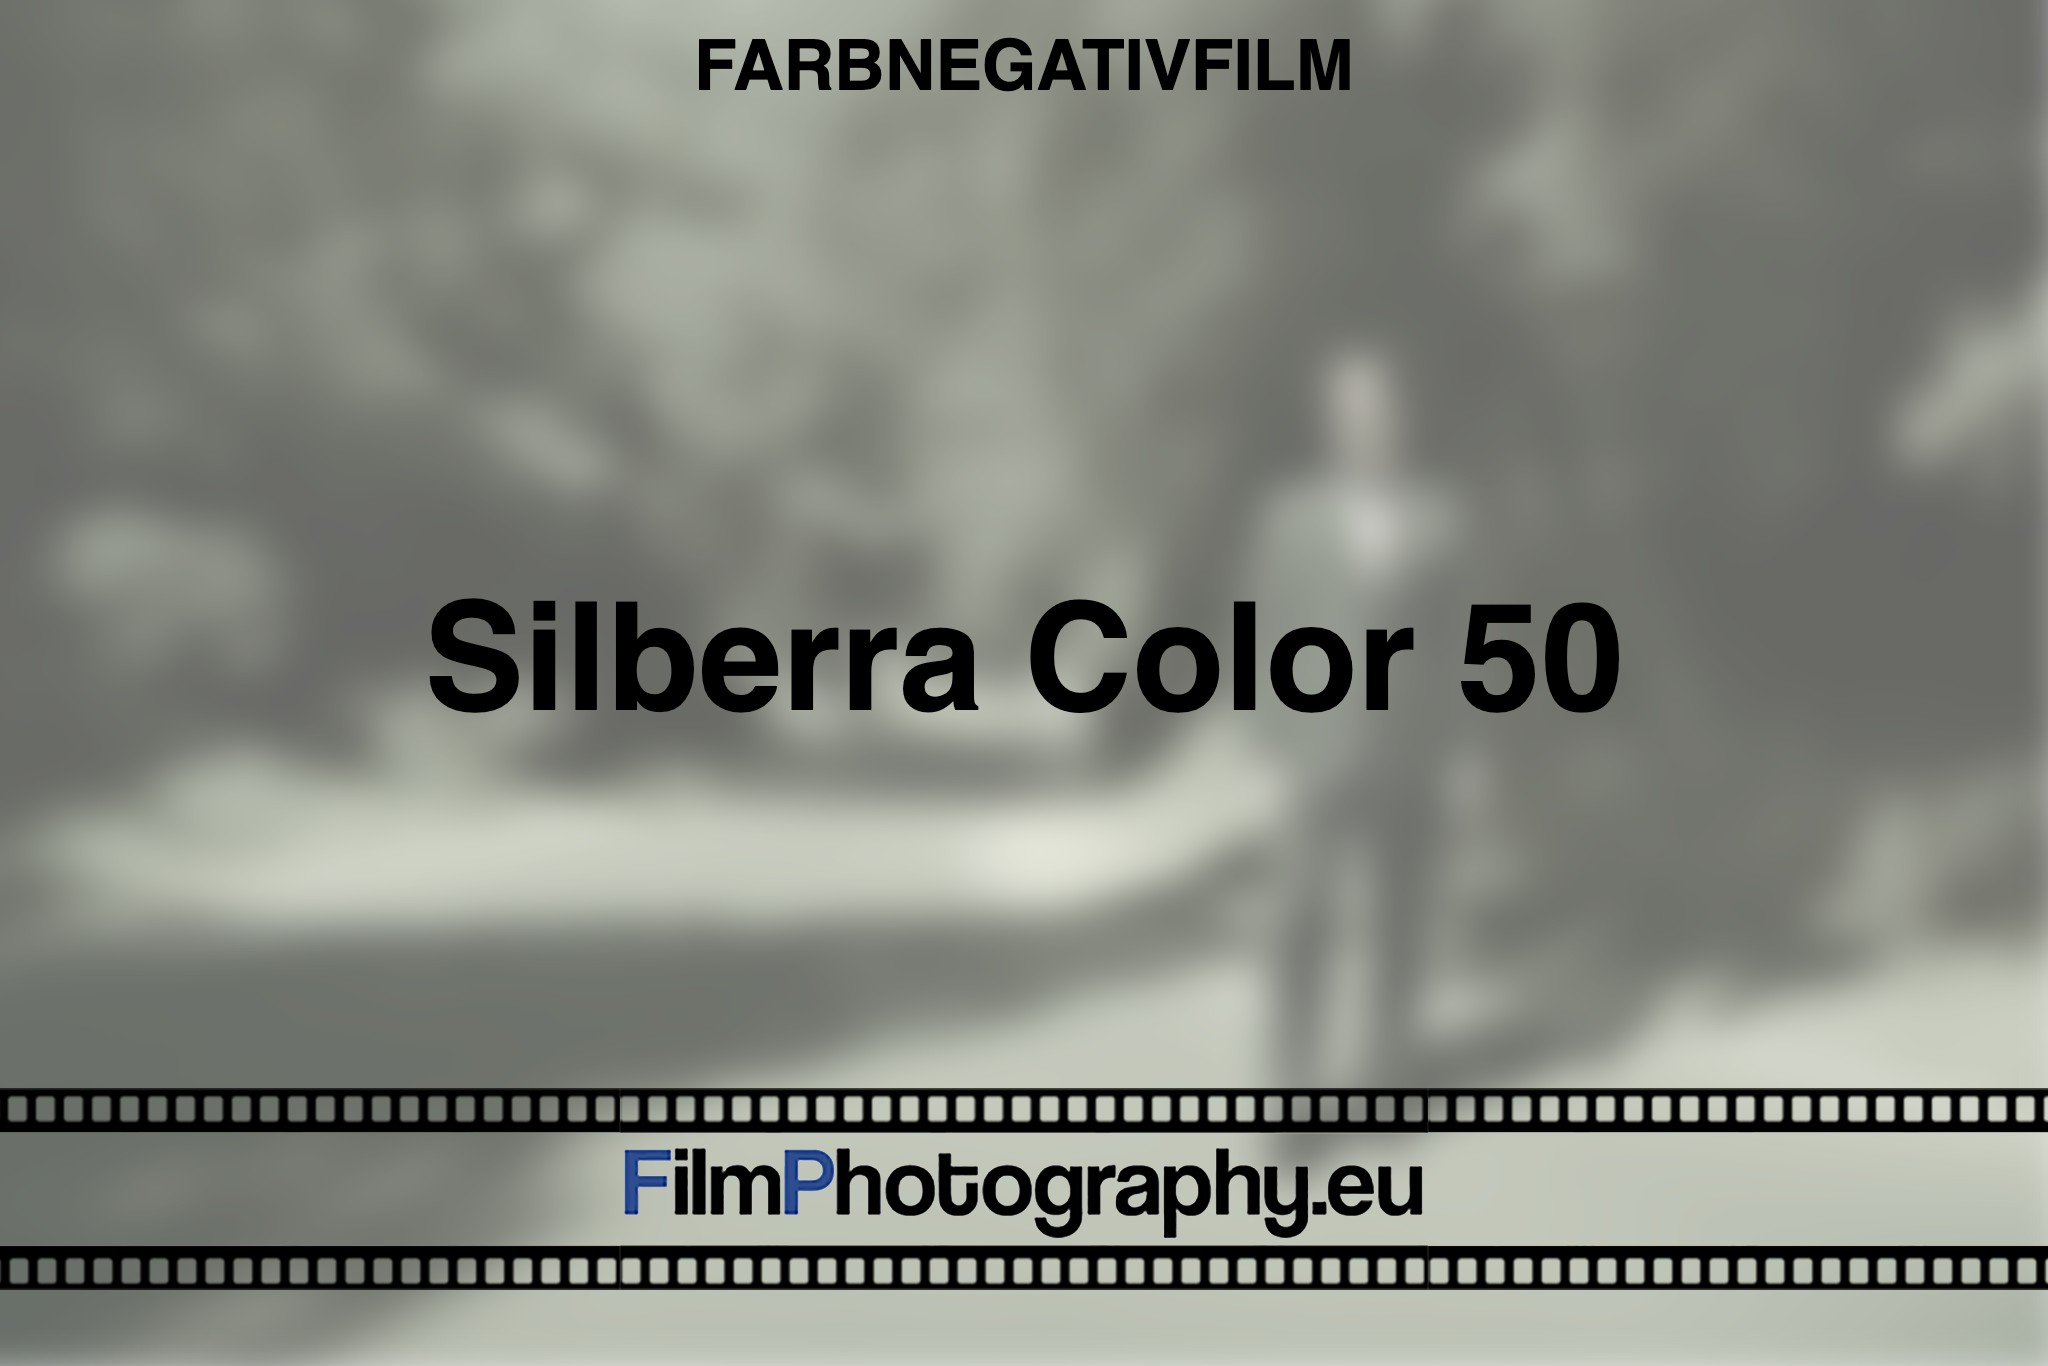 silberra-color-50-farbnegativfilm-bnv